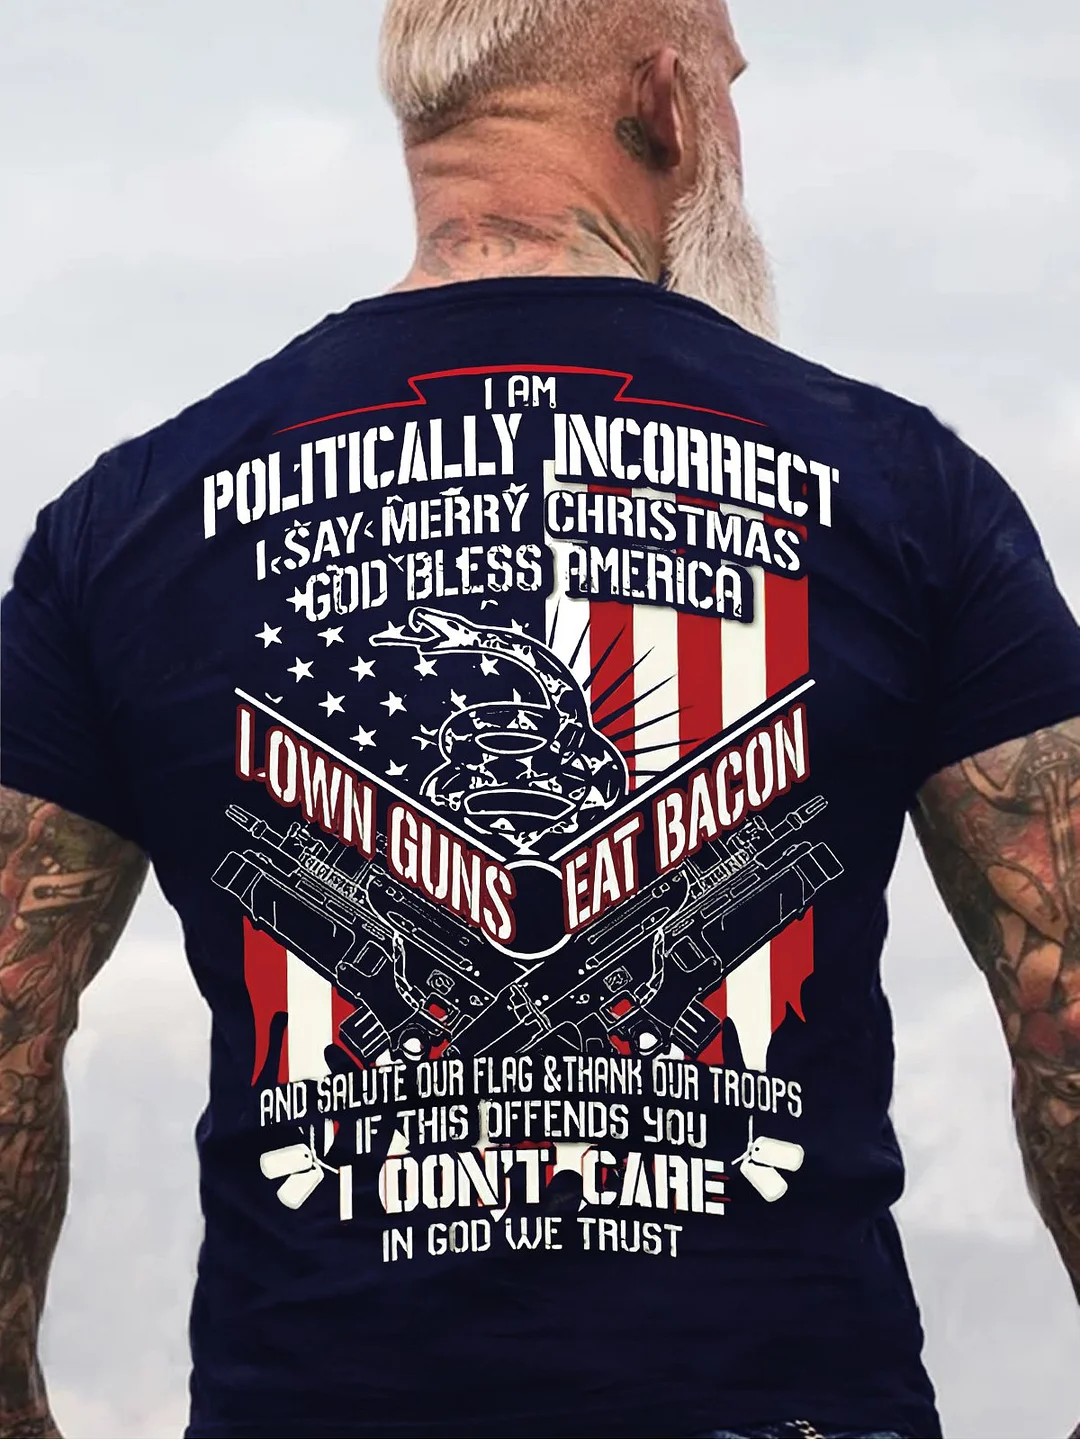 I Am Politically Incorrect I Say Merry Christmas, God Bless America, I Own Guns Eat Bacon Veteran T-Shirt